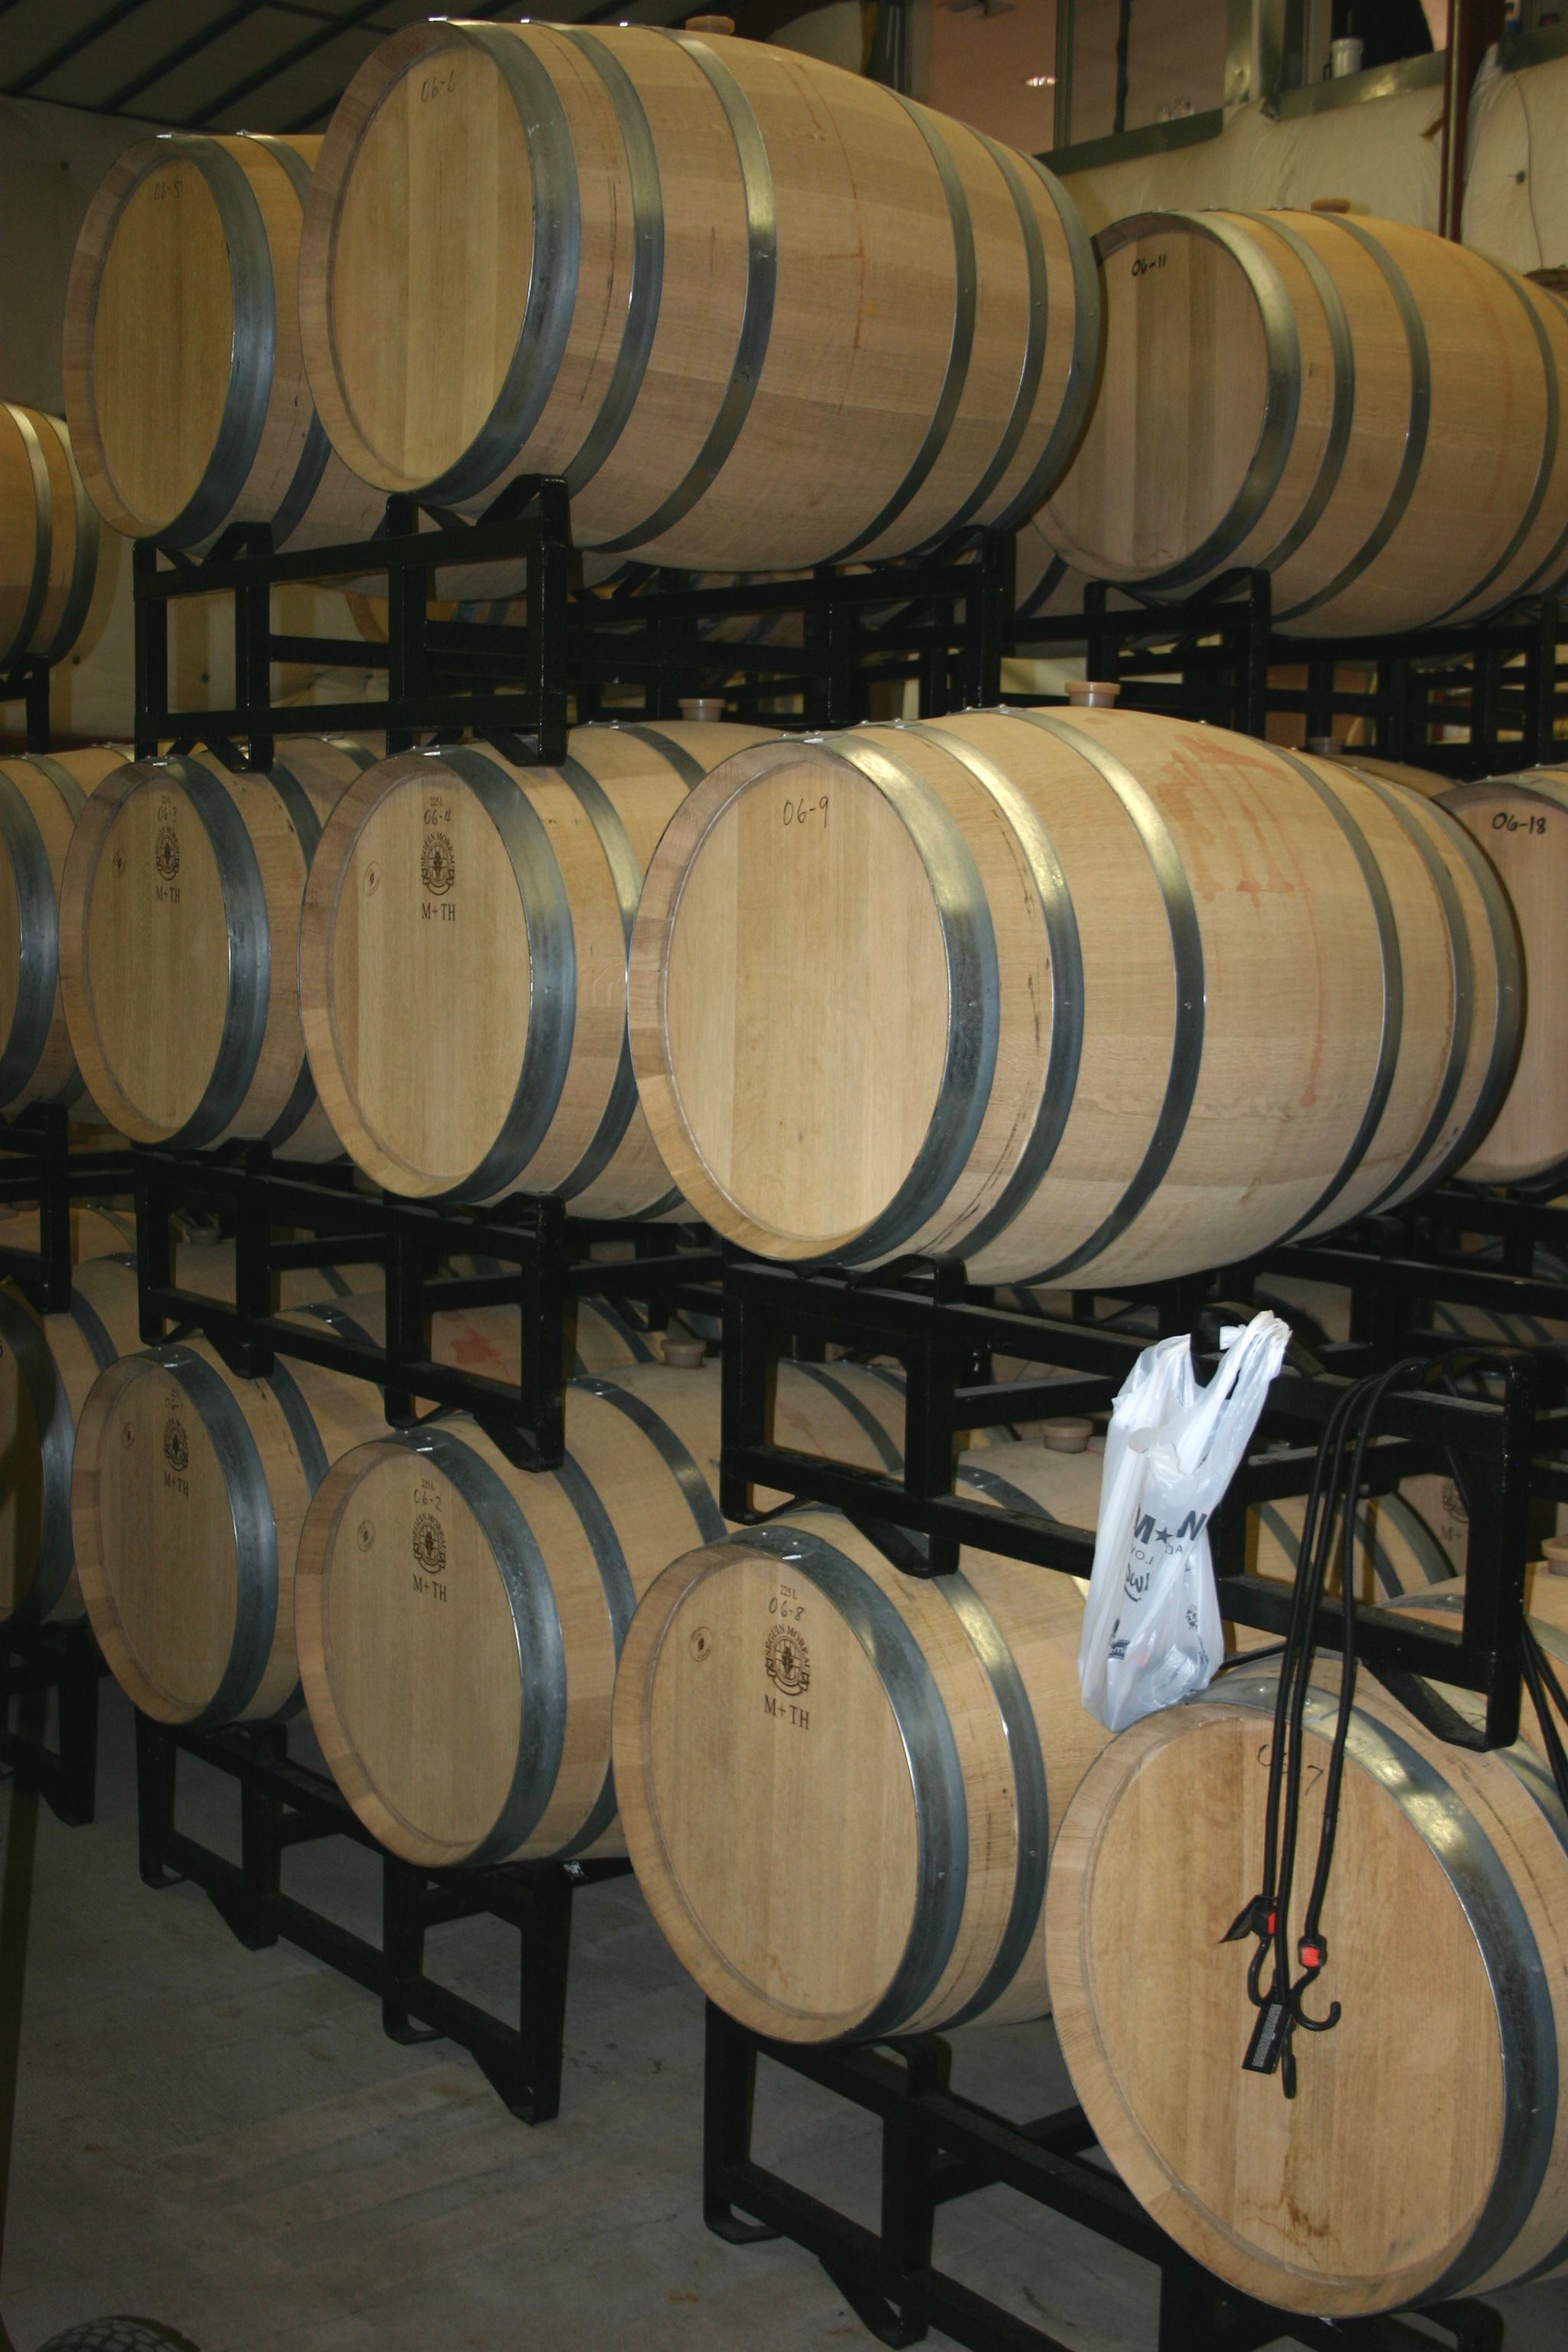 Barrels of aging wine